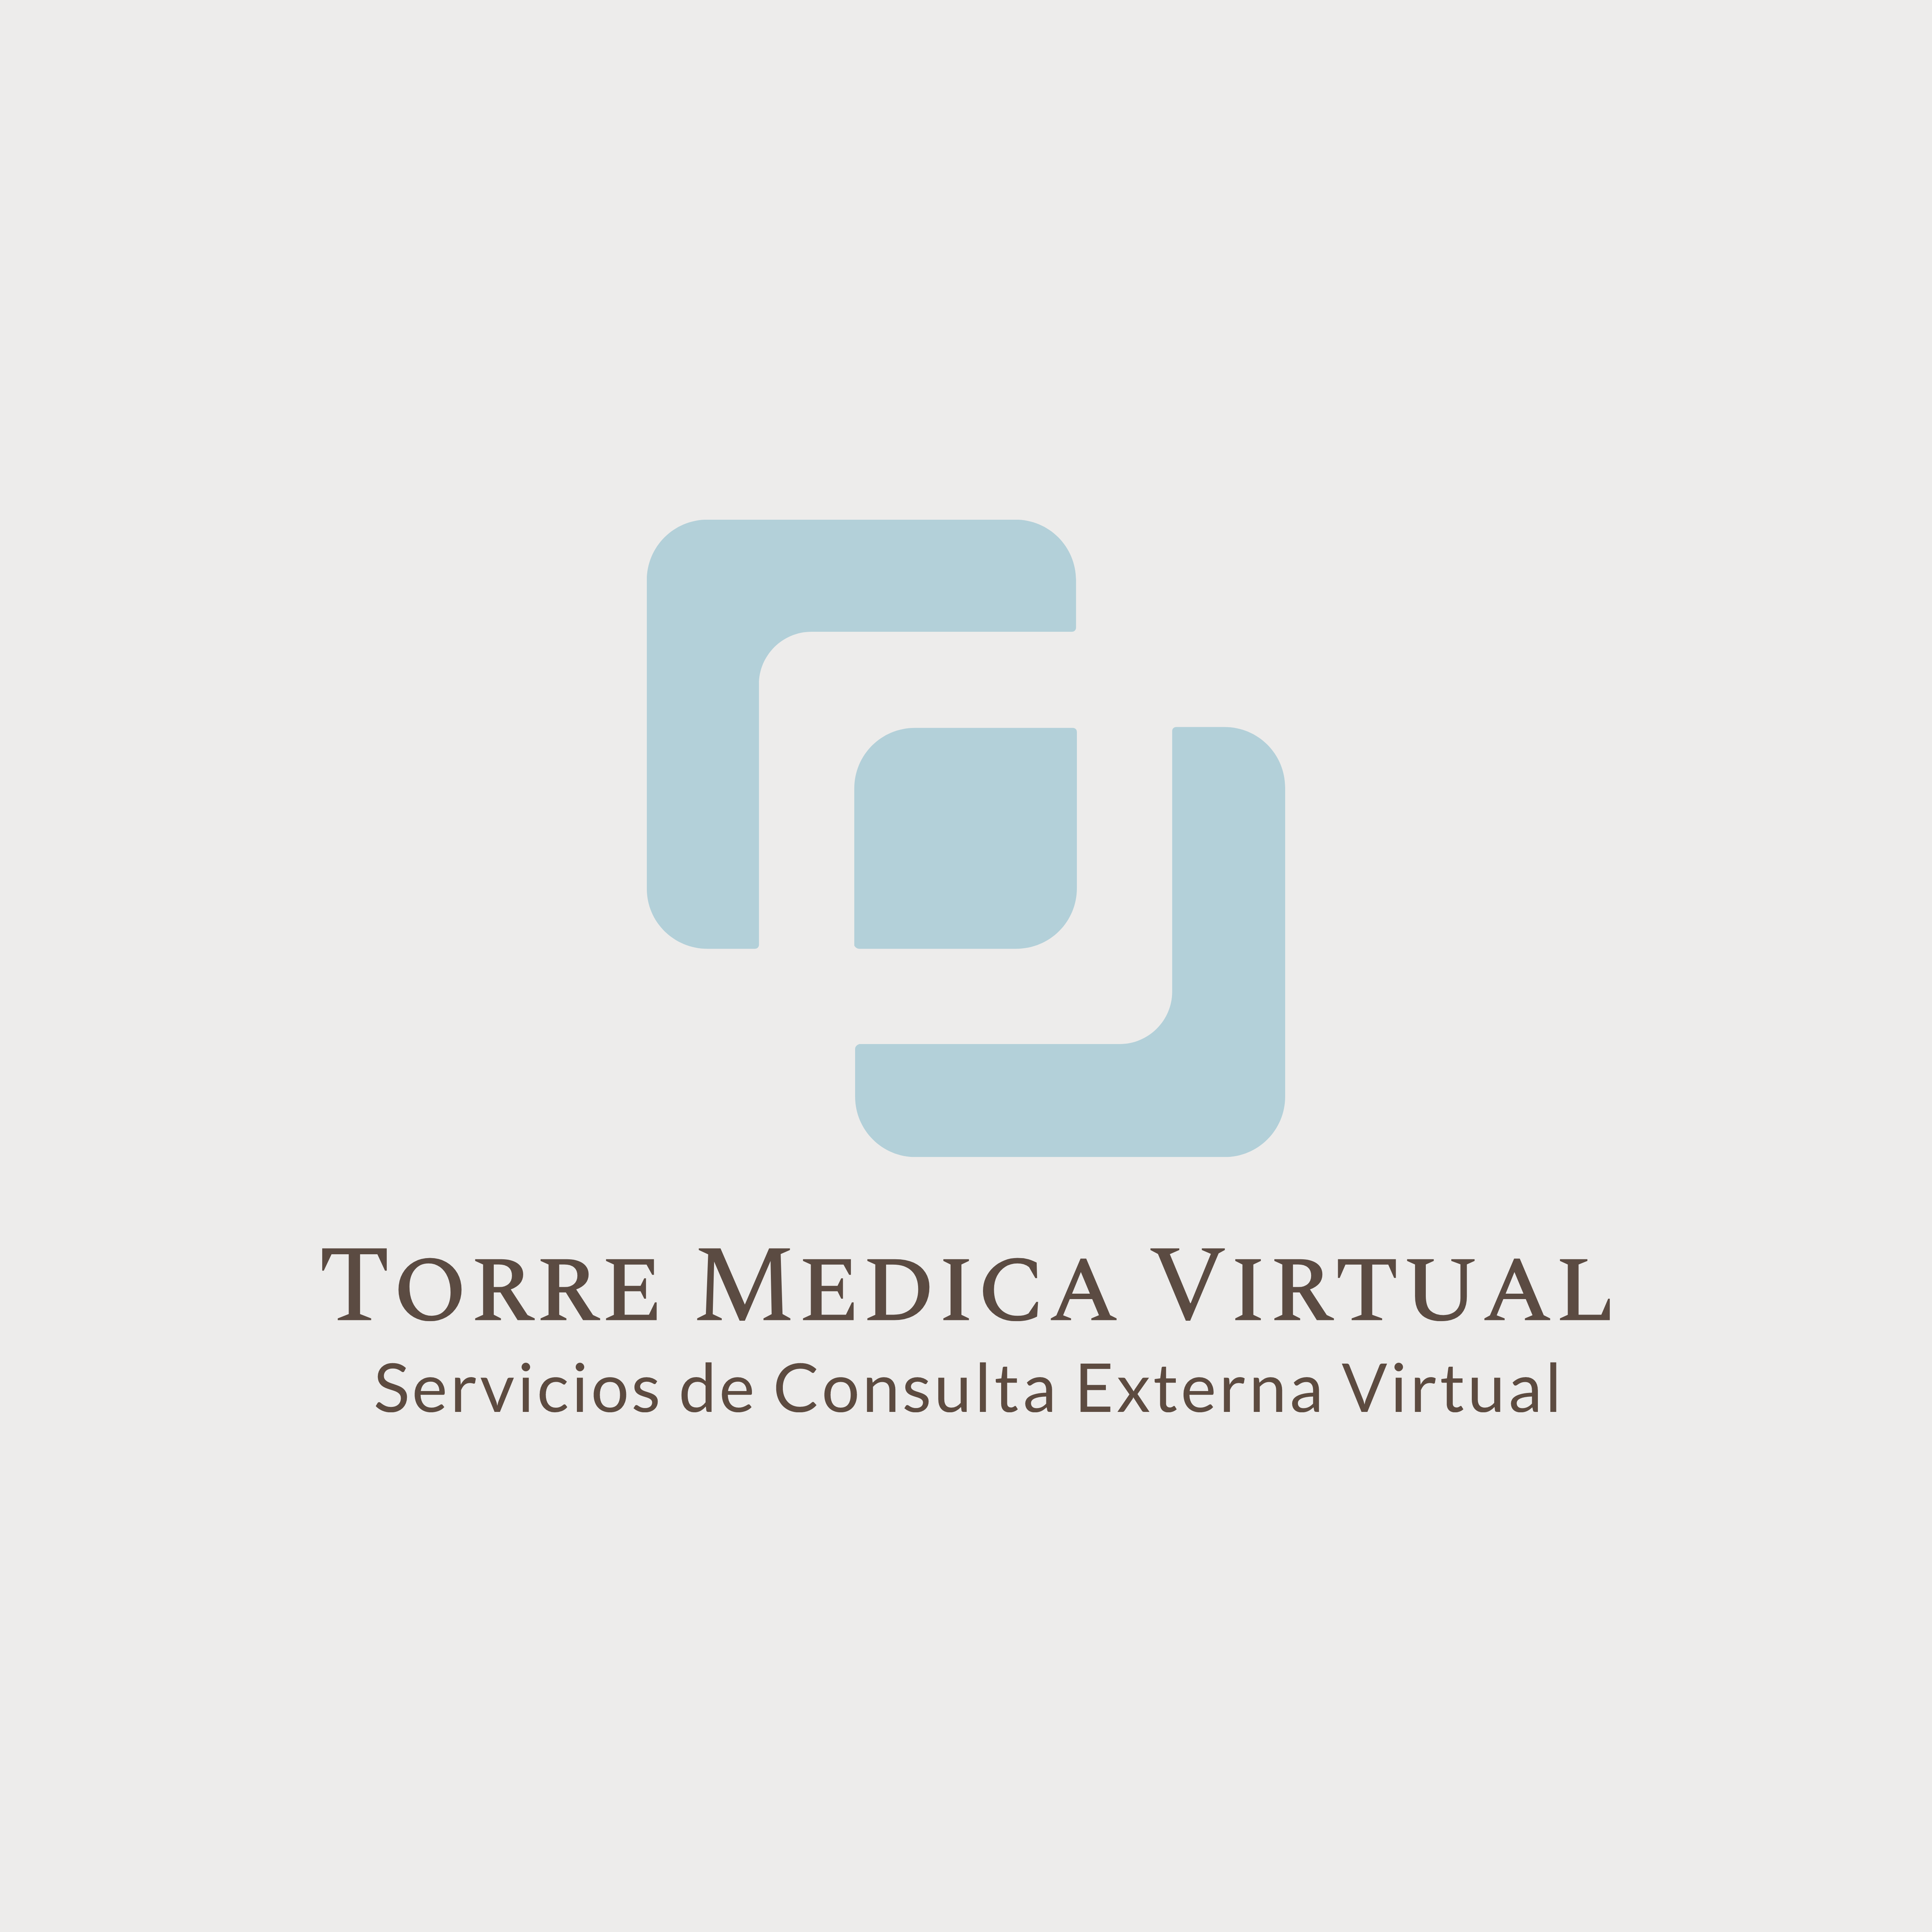 Torre Medica Virtual Logo